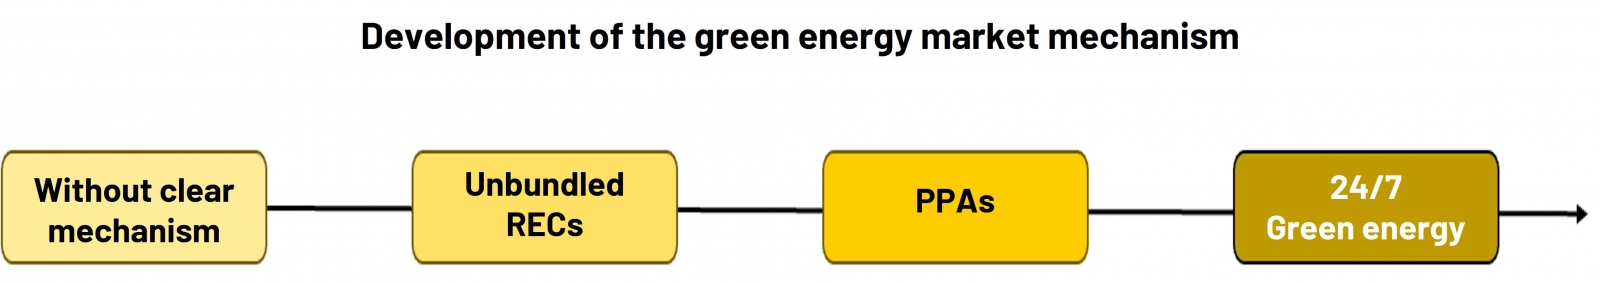 Development of the green energy market mechanism